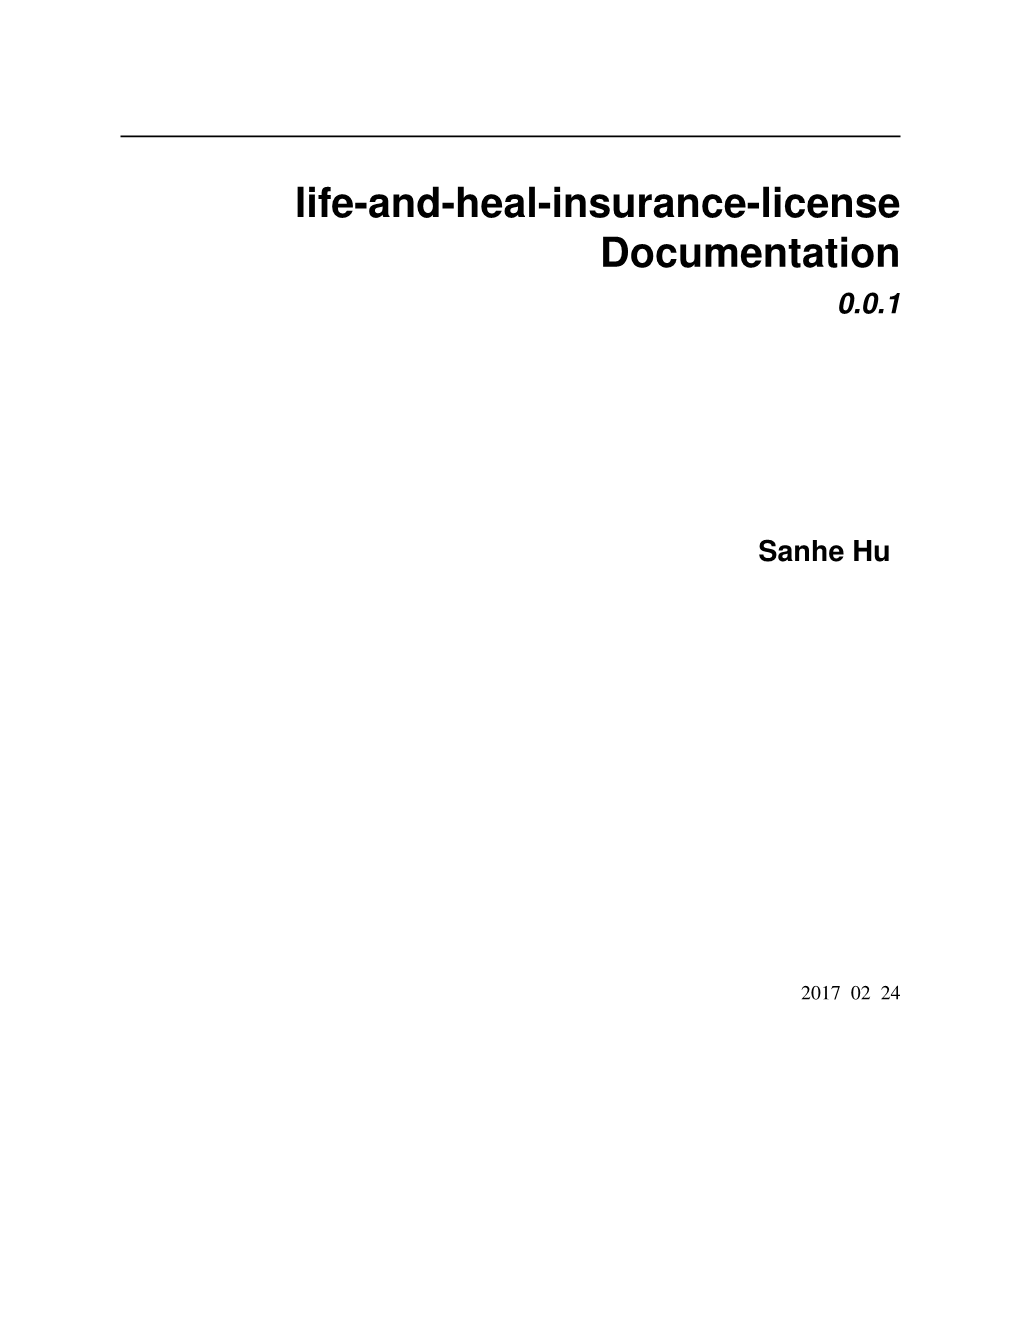 Life-And-Heal-Insurance-License Documentation 0.0.1 Sanhe Hu